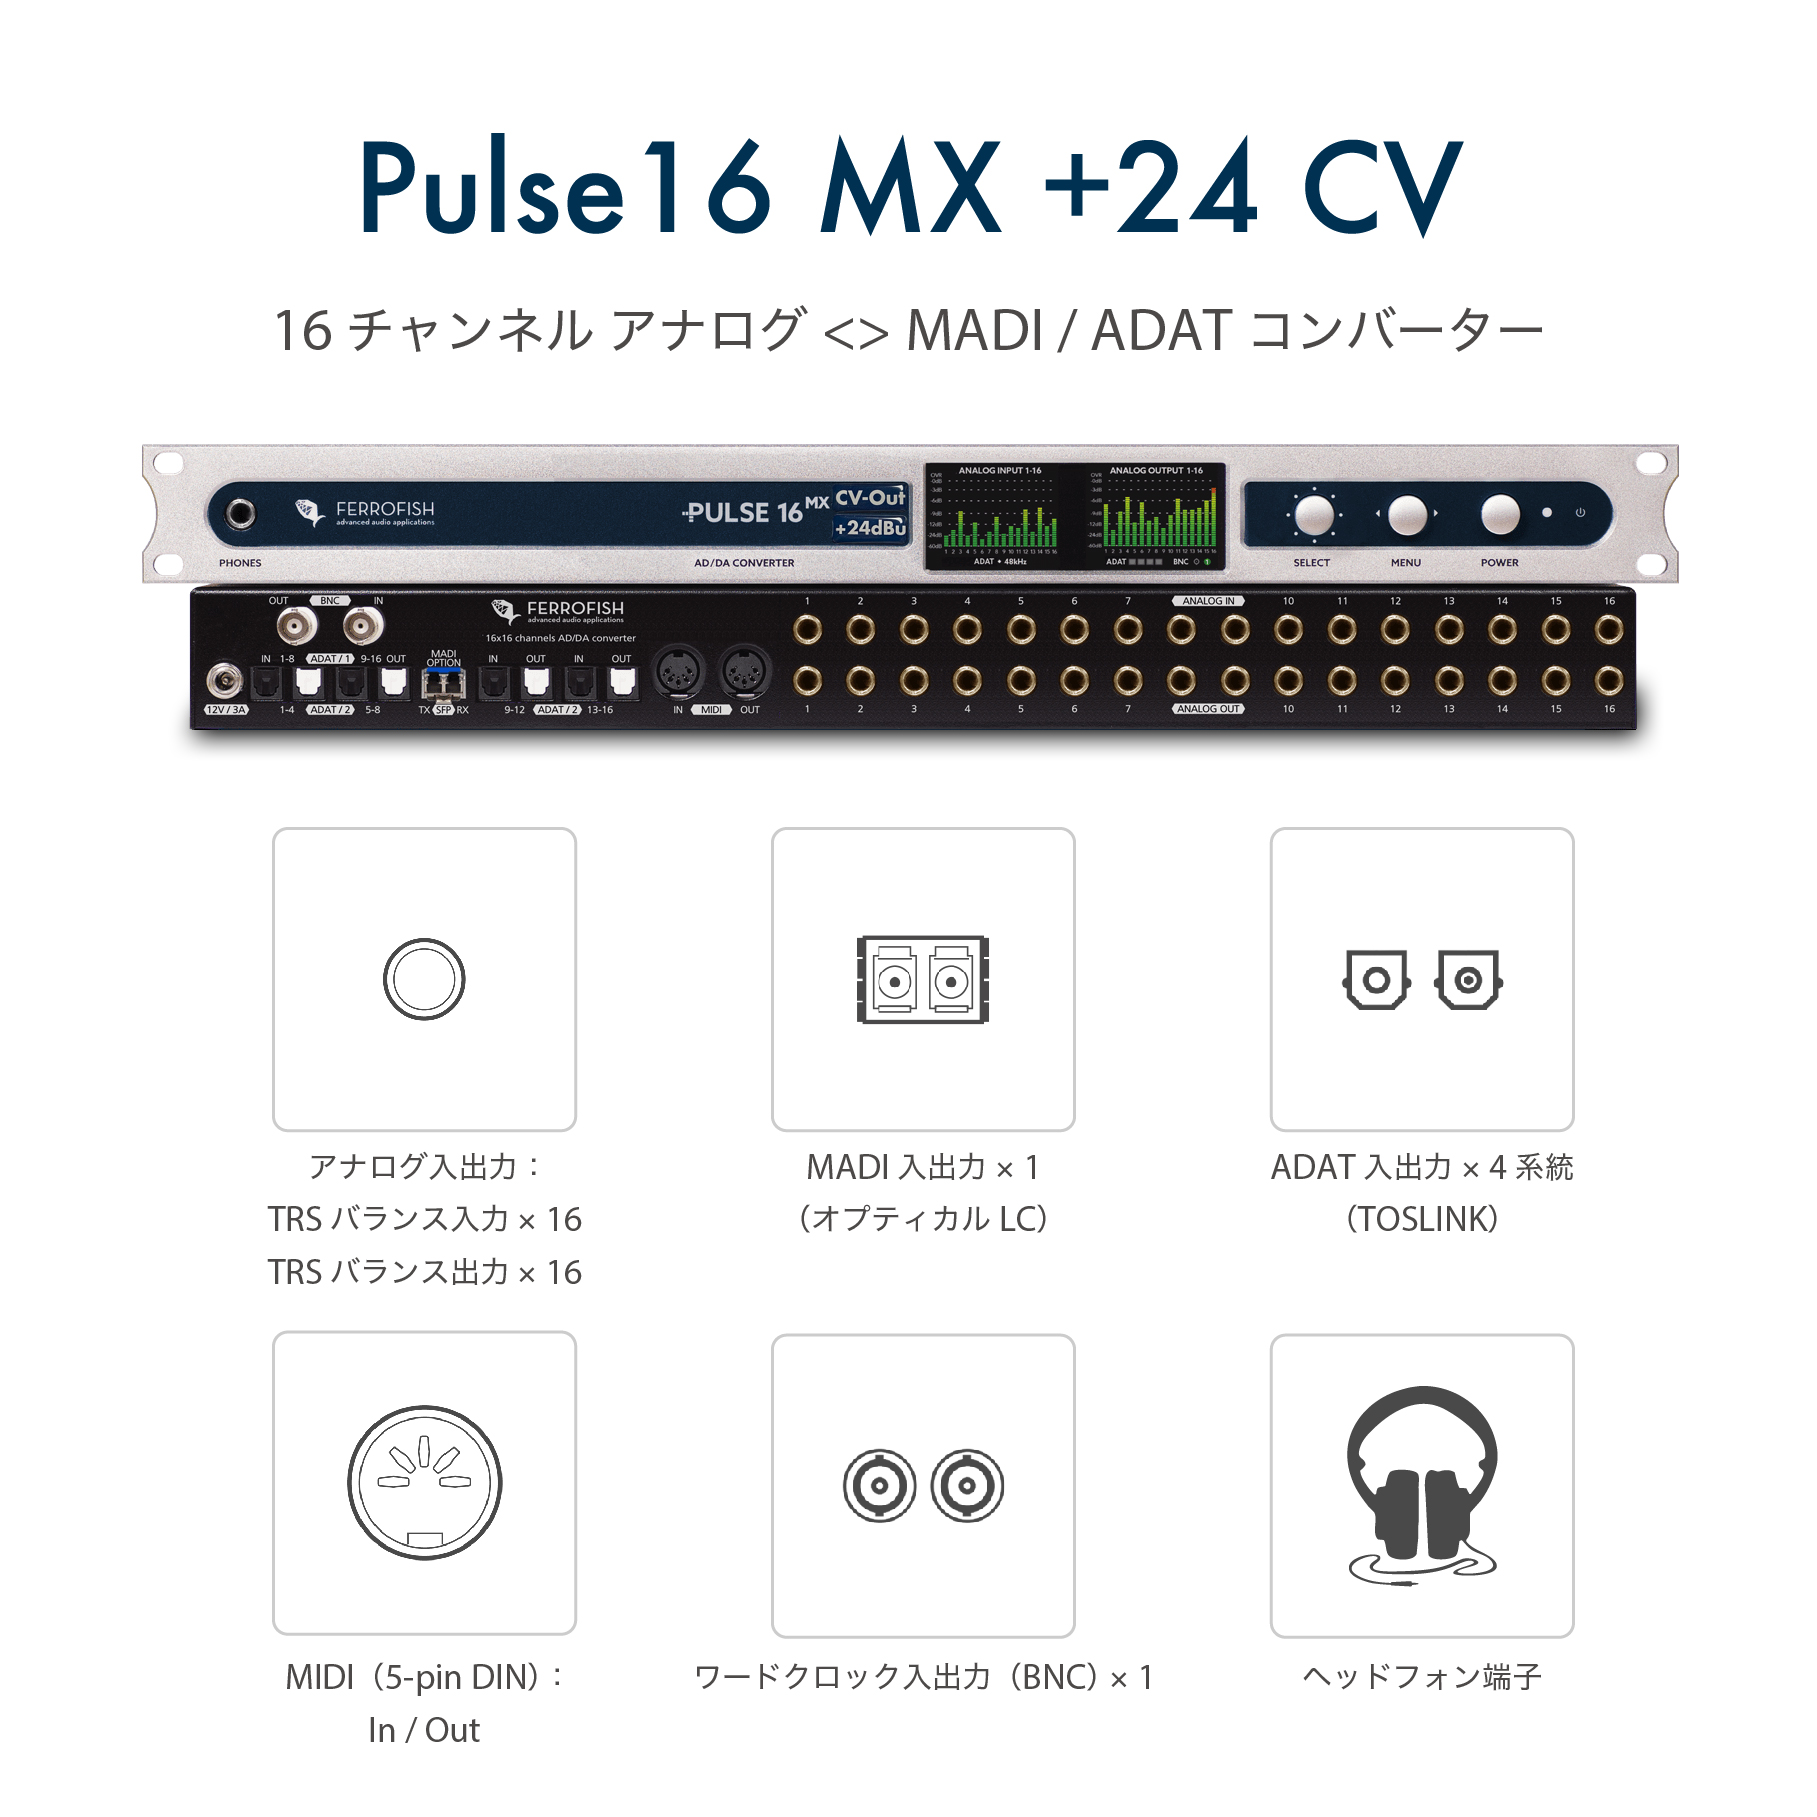 Pulse16 MX +24 CV